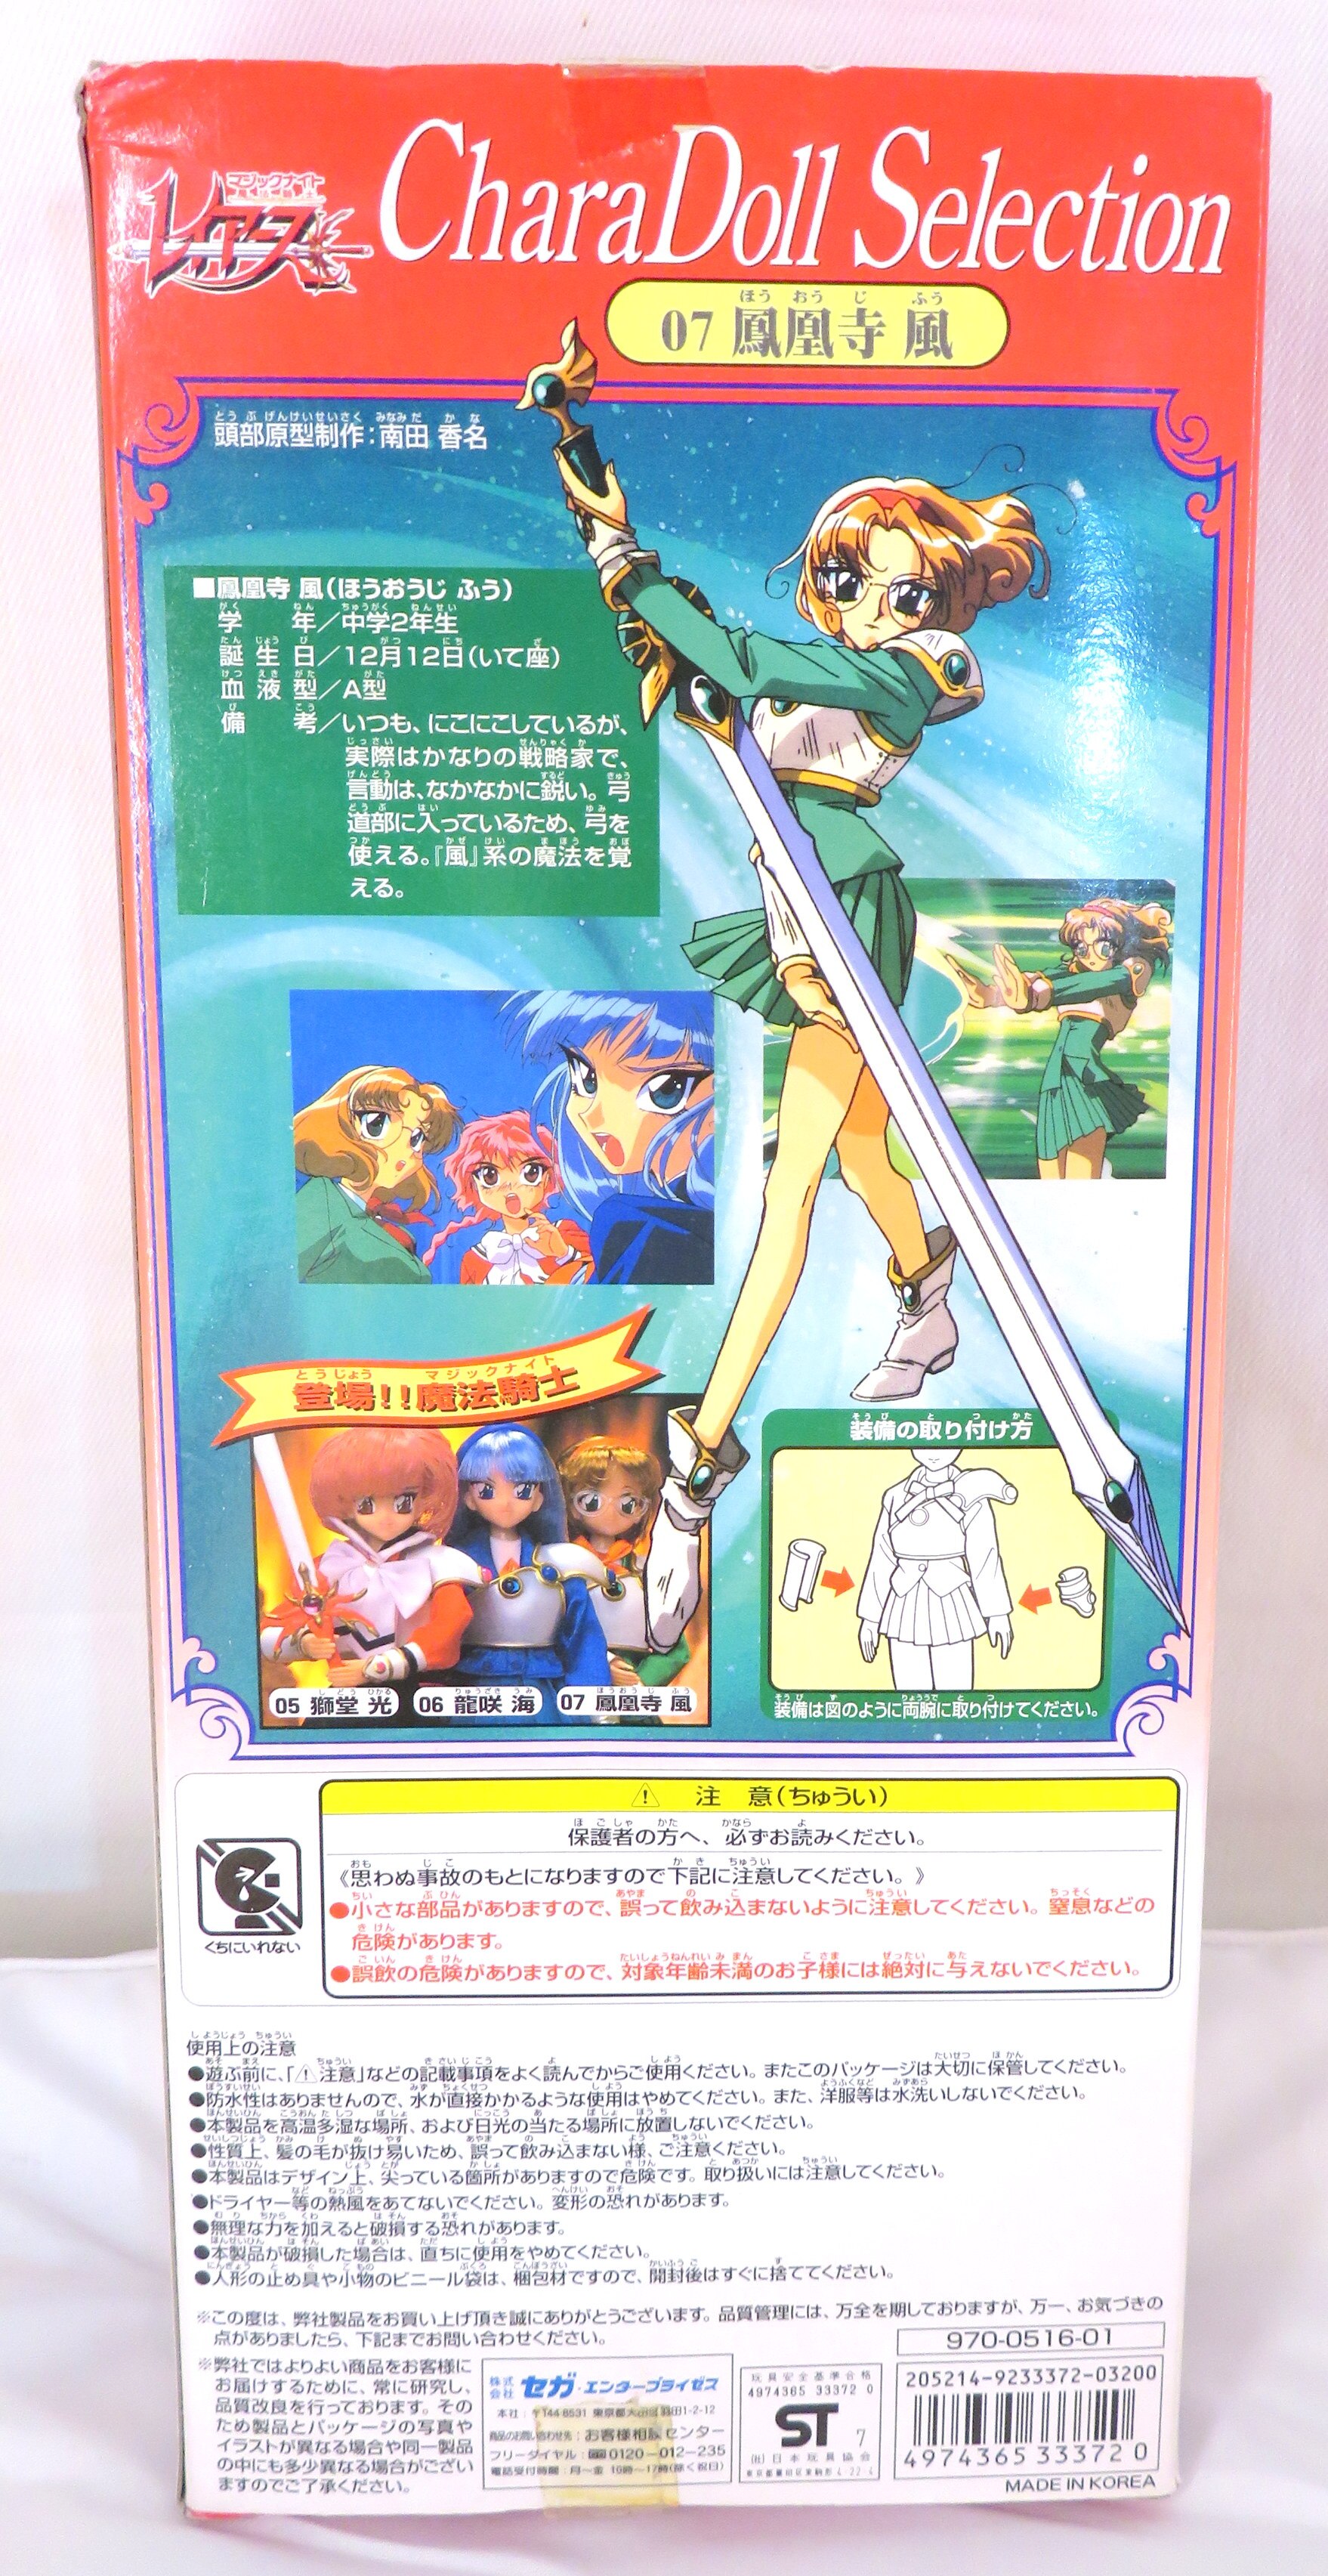 Sega Magic Knight Rayearth Characters Doll Selection Fuu Hououji Mandarake Online Shop